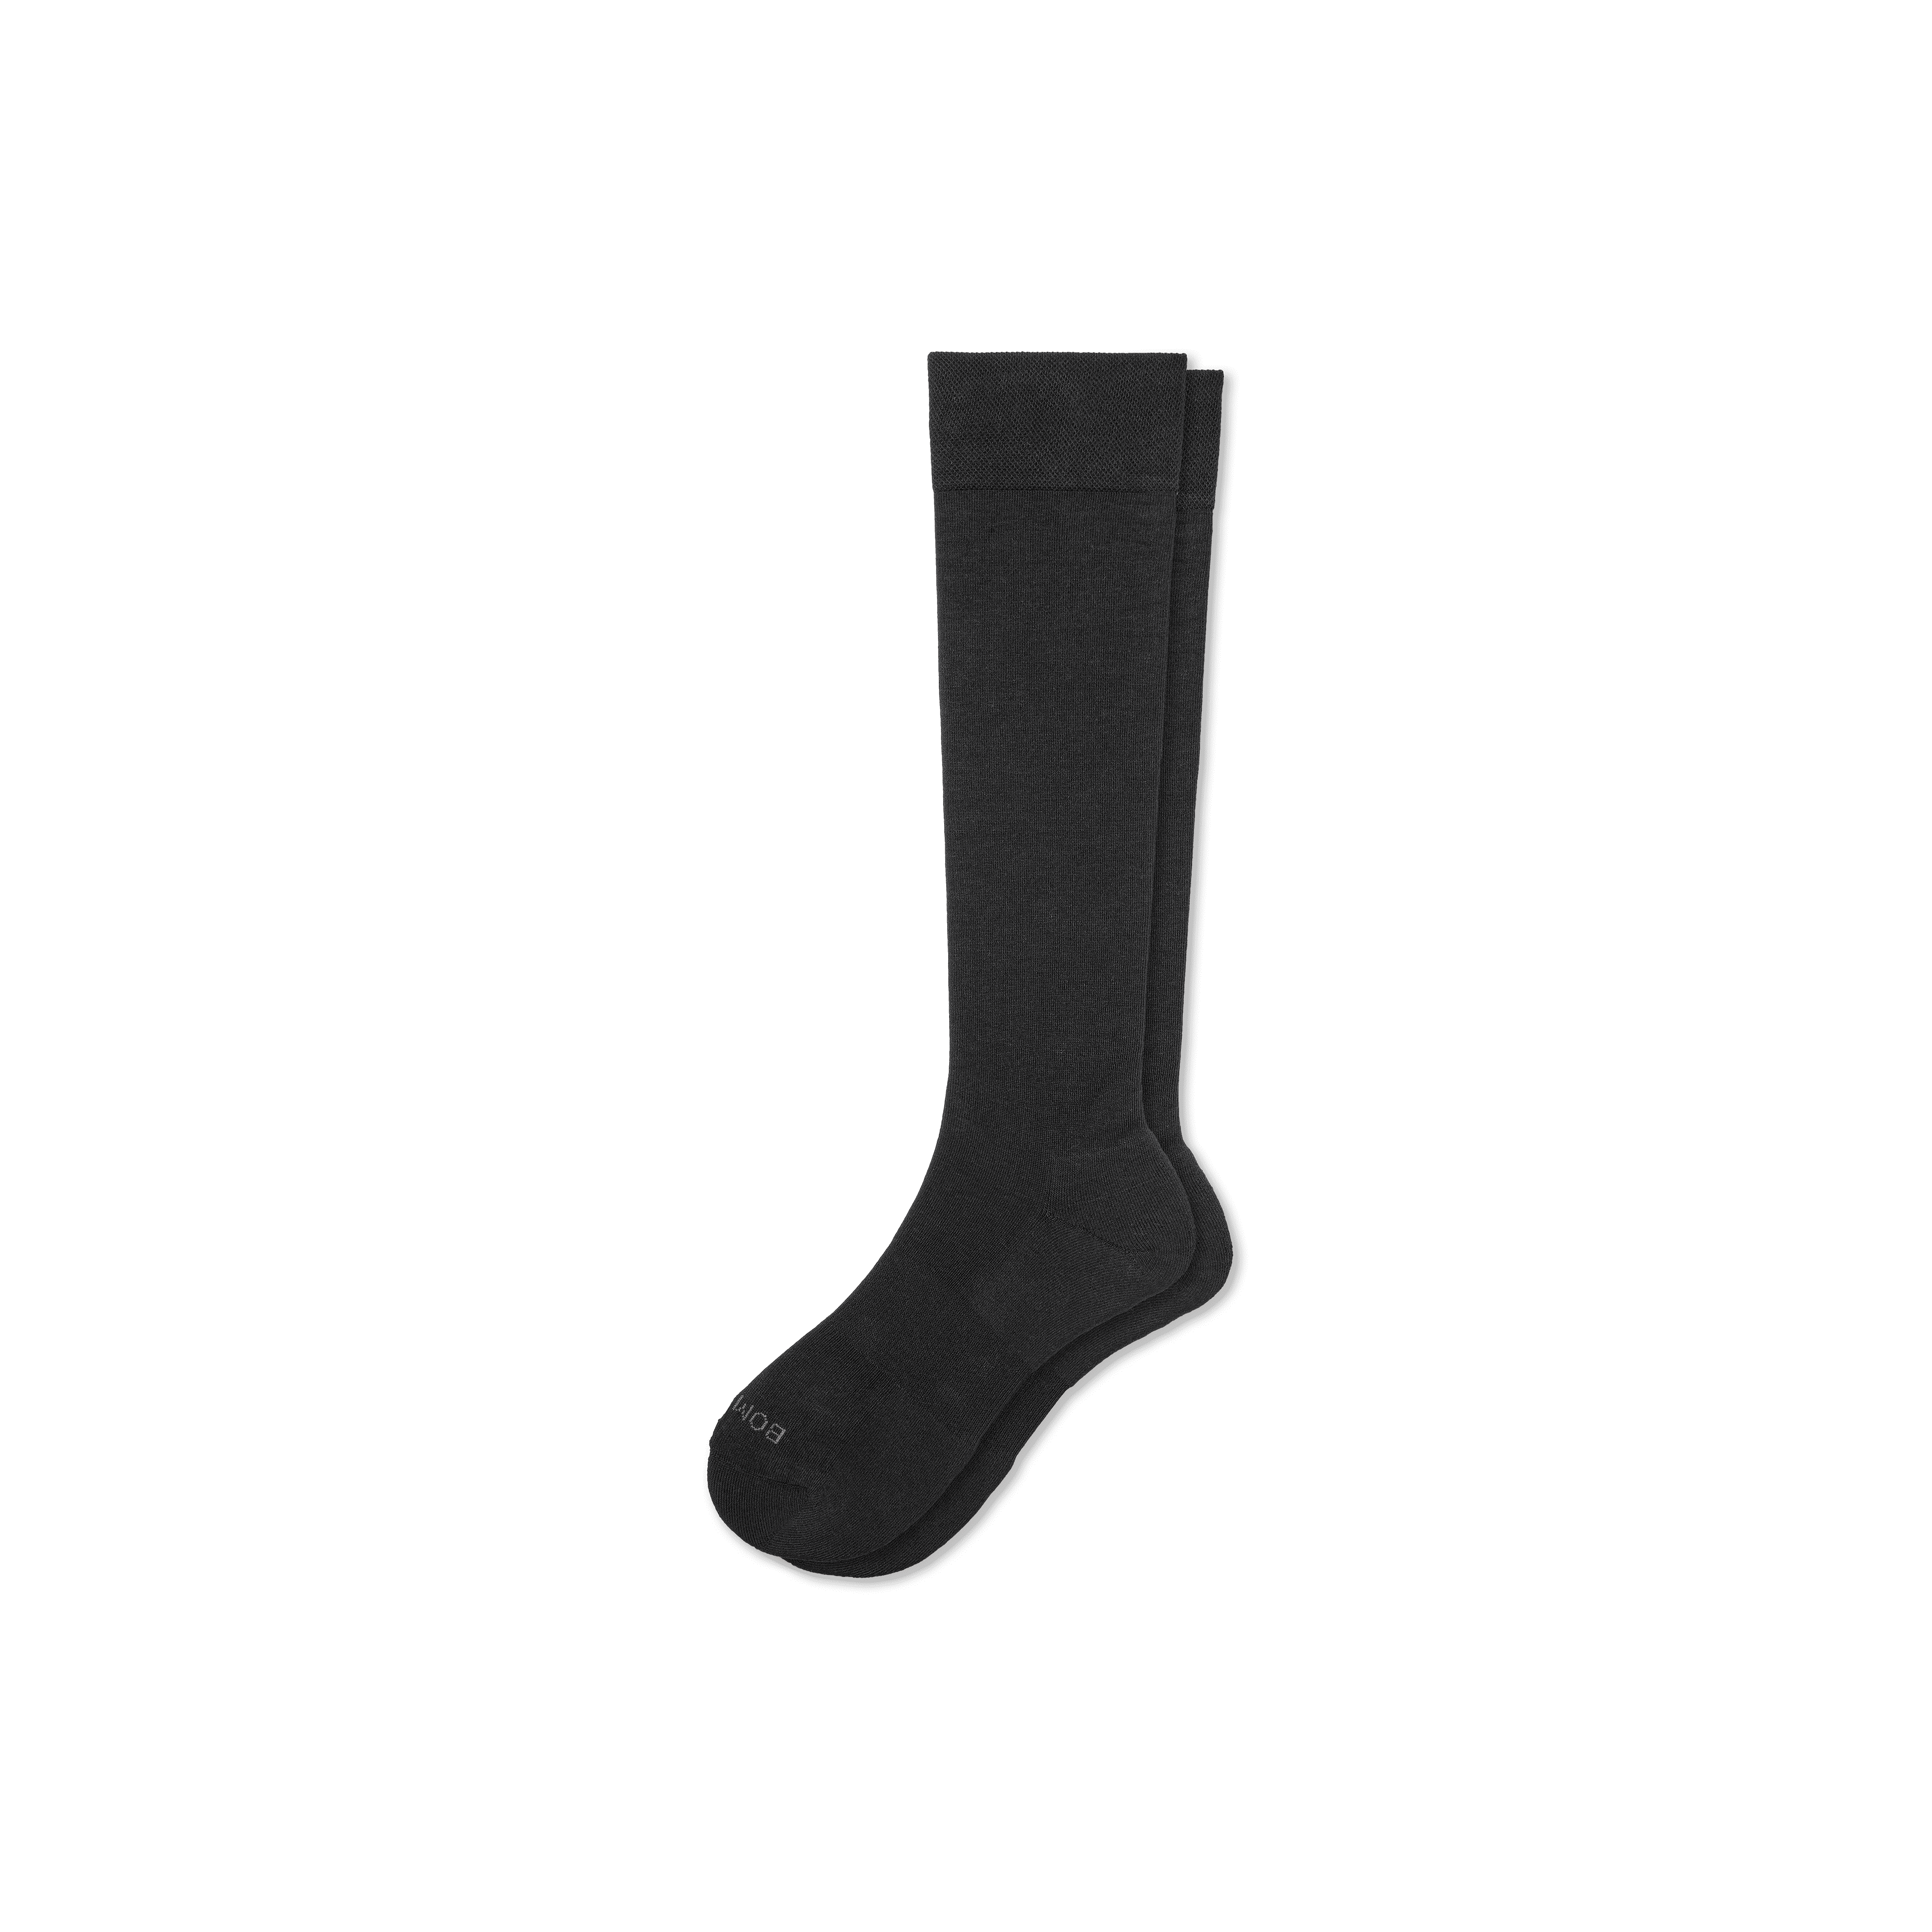 Bombas Dress Knee High Socks In Solid Black